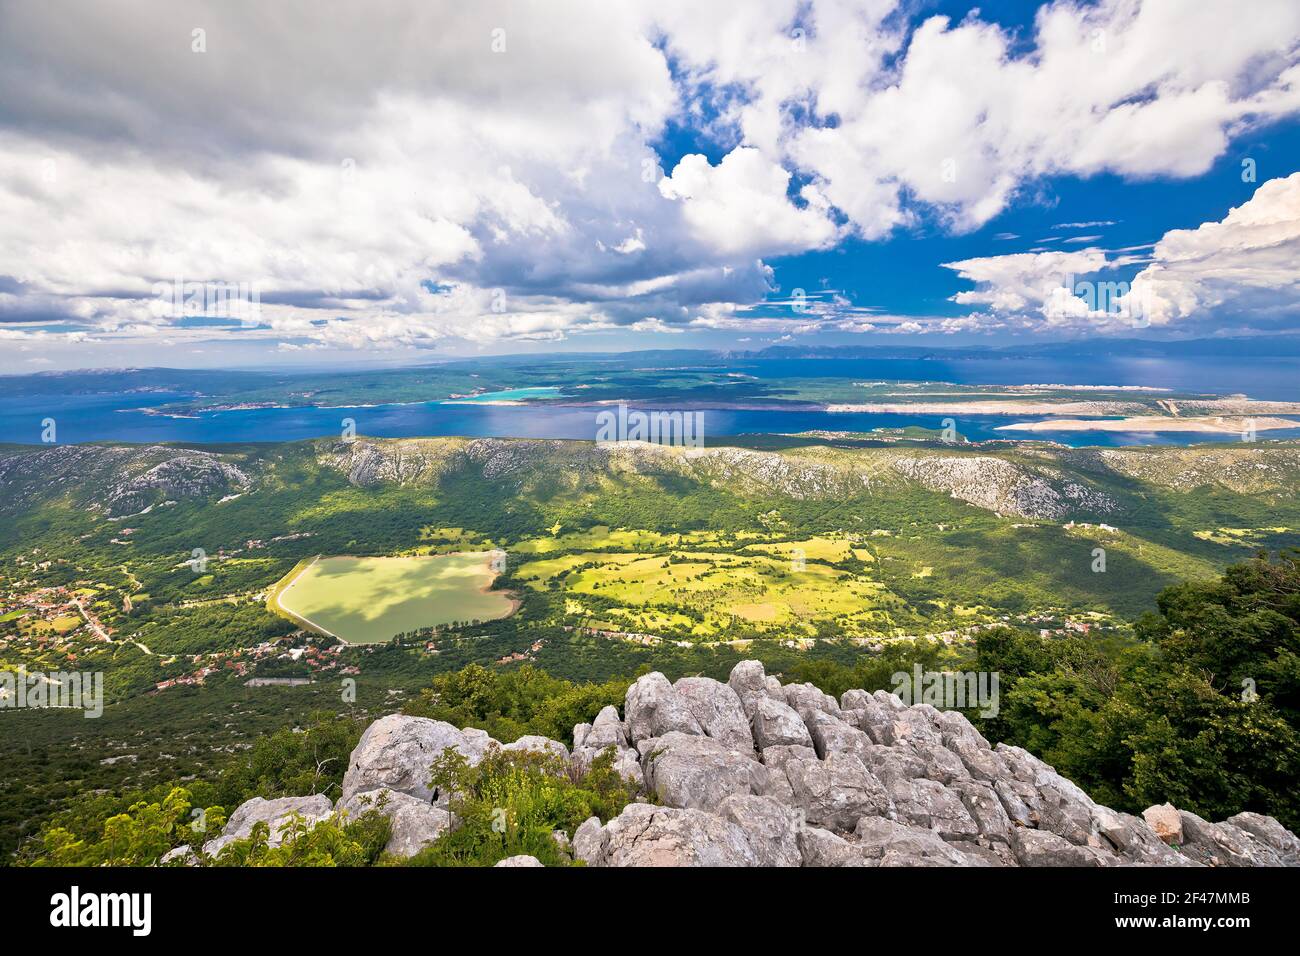 Vinodol valley and lake Tribalj view from Mahavica viewpoint, Kvarner bay region of Croatia Stock Photo